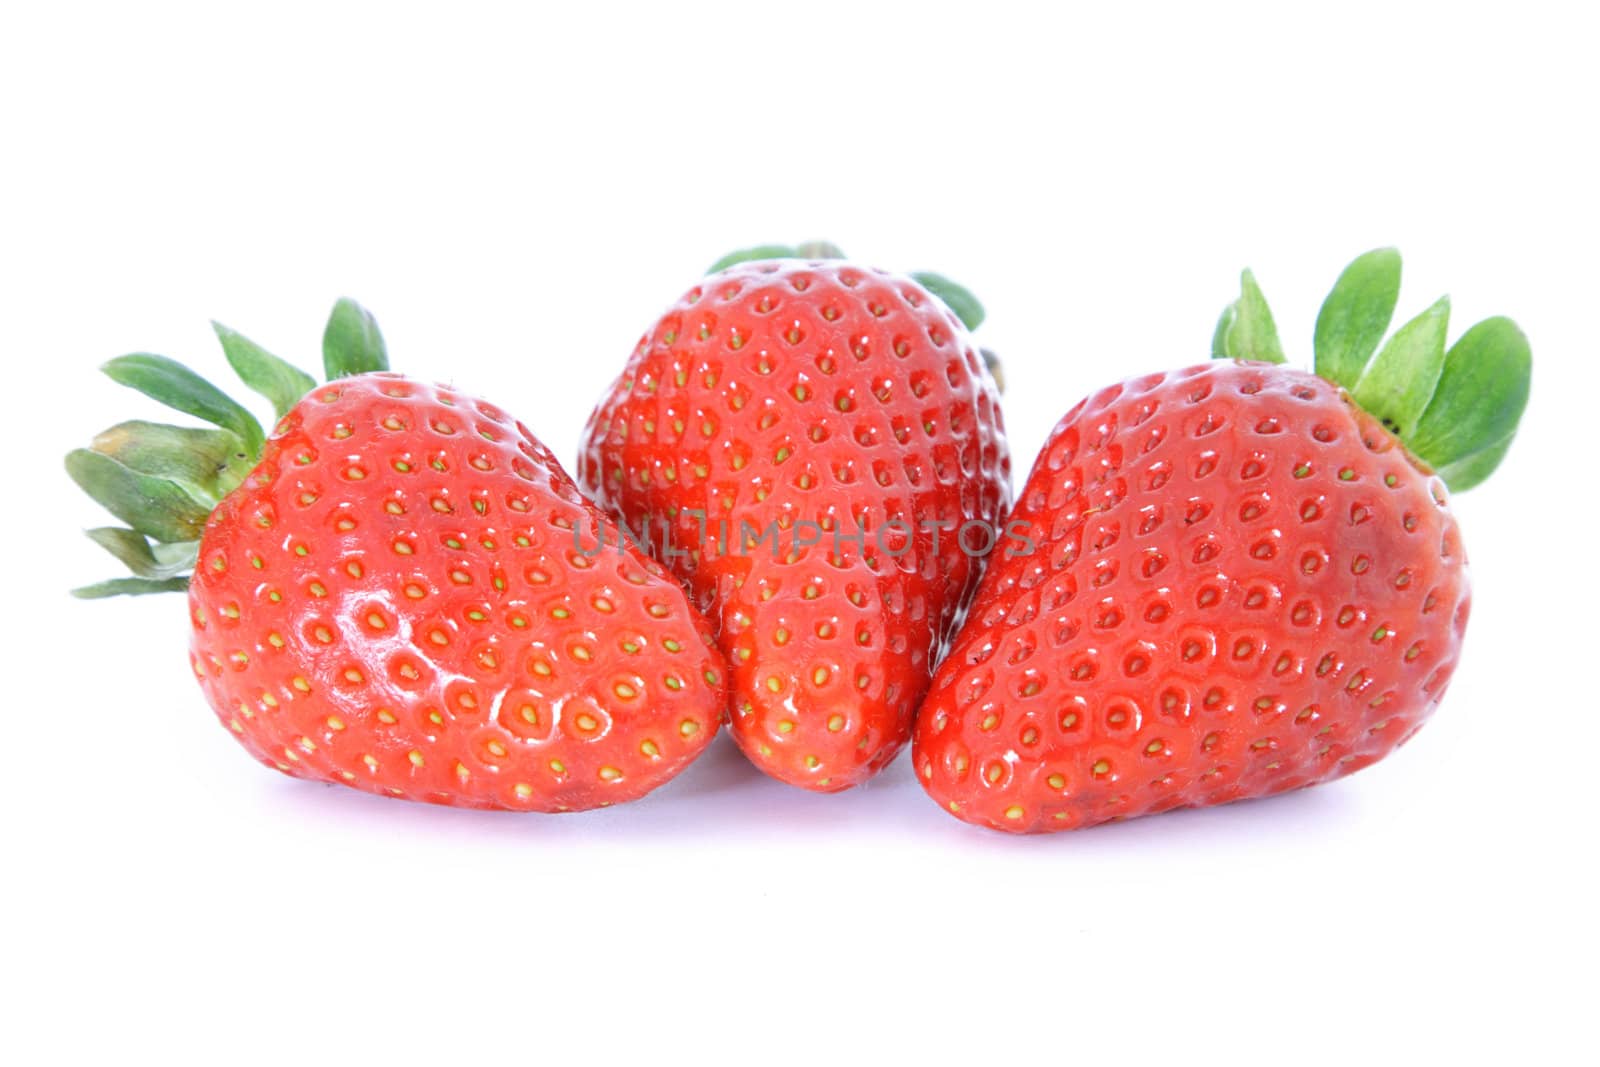 Strawberries on white background.